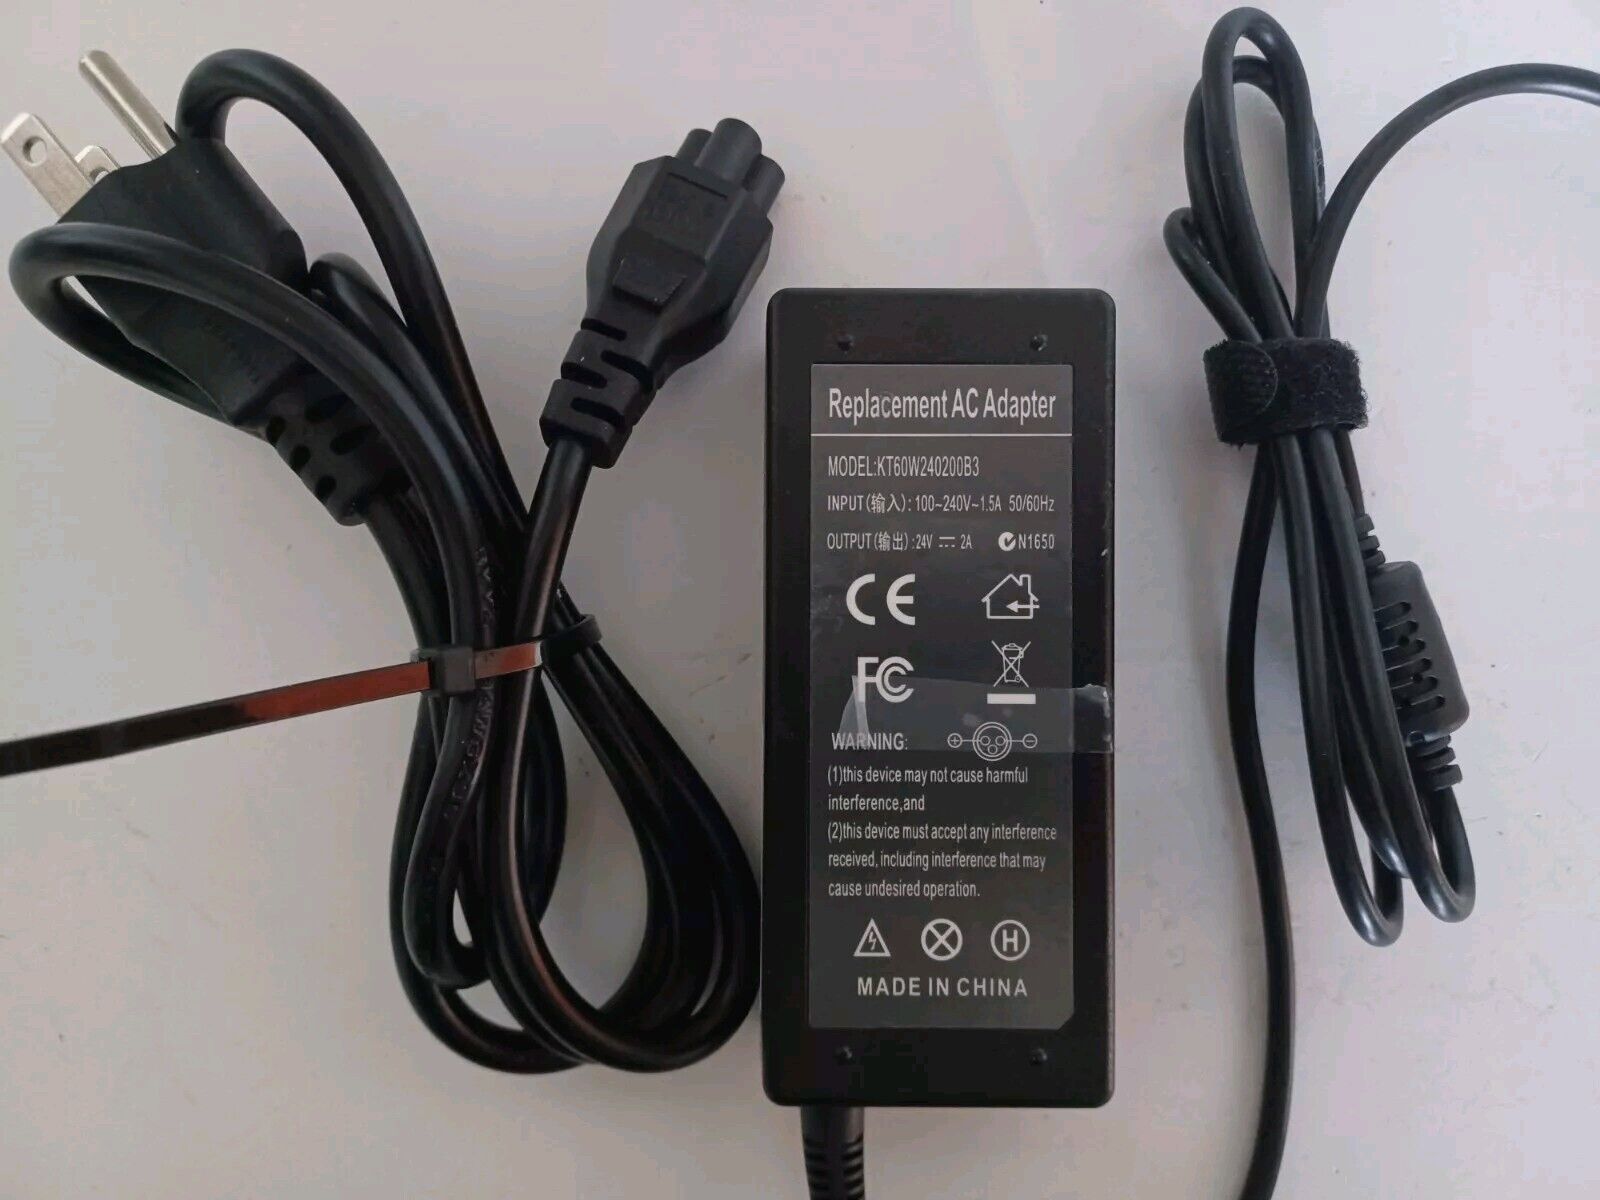 Replacement AC Adapter input 100-240-1.5A 50/60Hz output 24V- KT60W240200B3